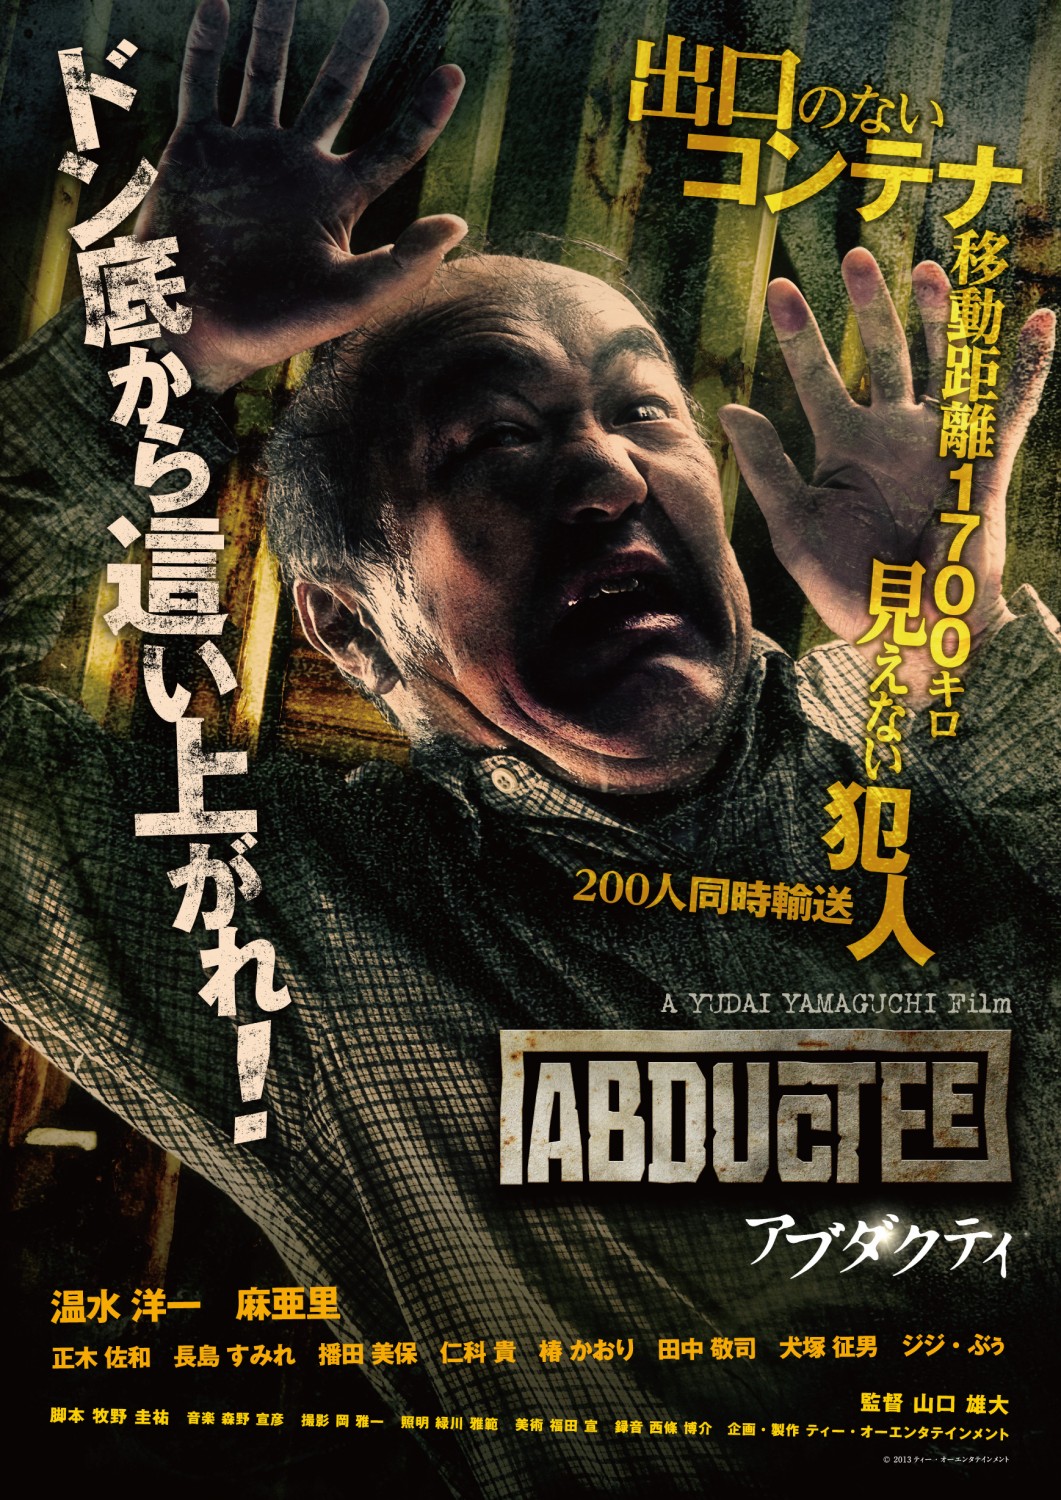 Extra Large Movie Poster Image for Abudakuti 